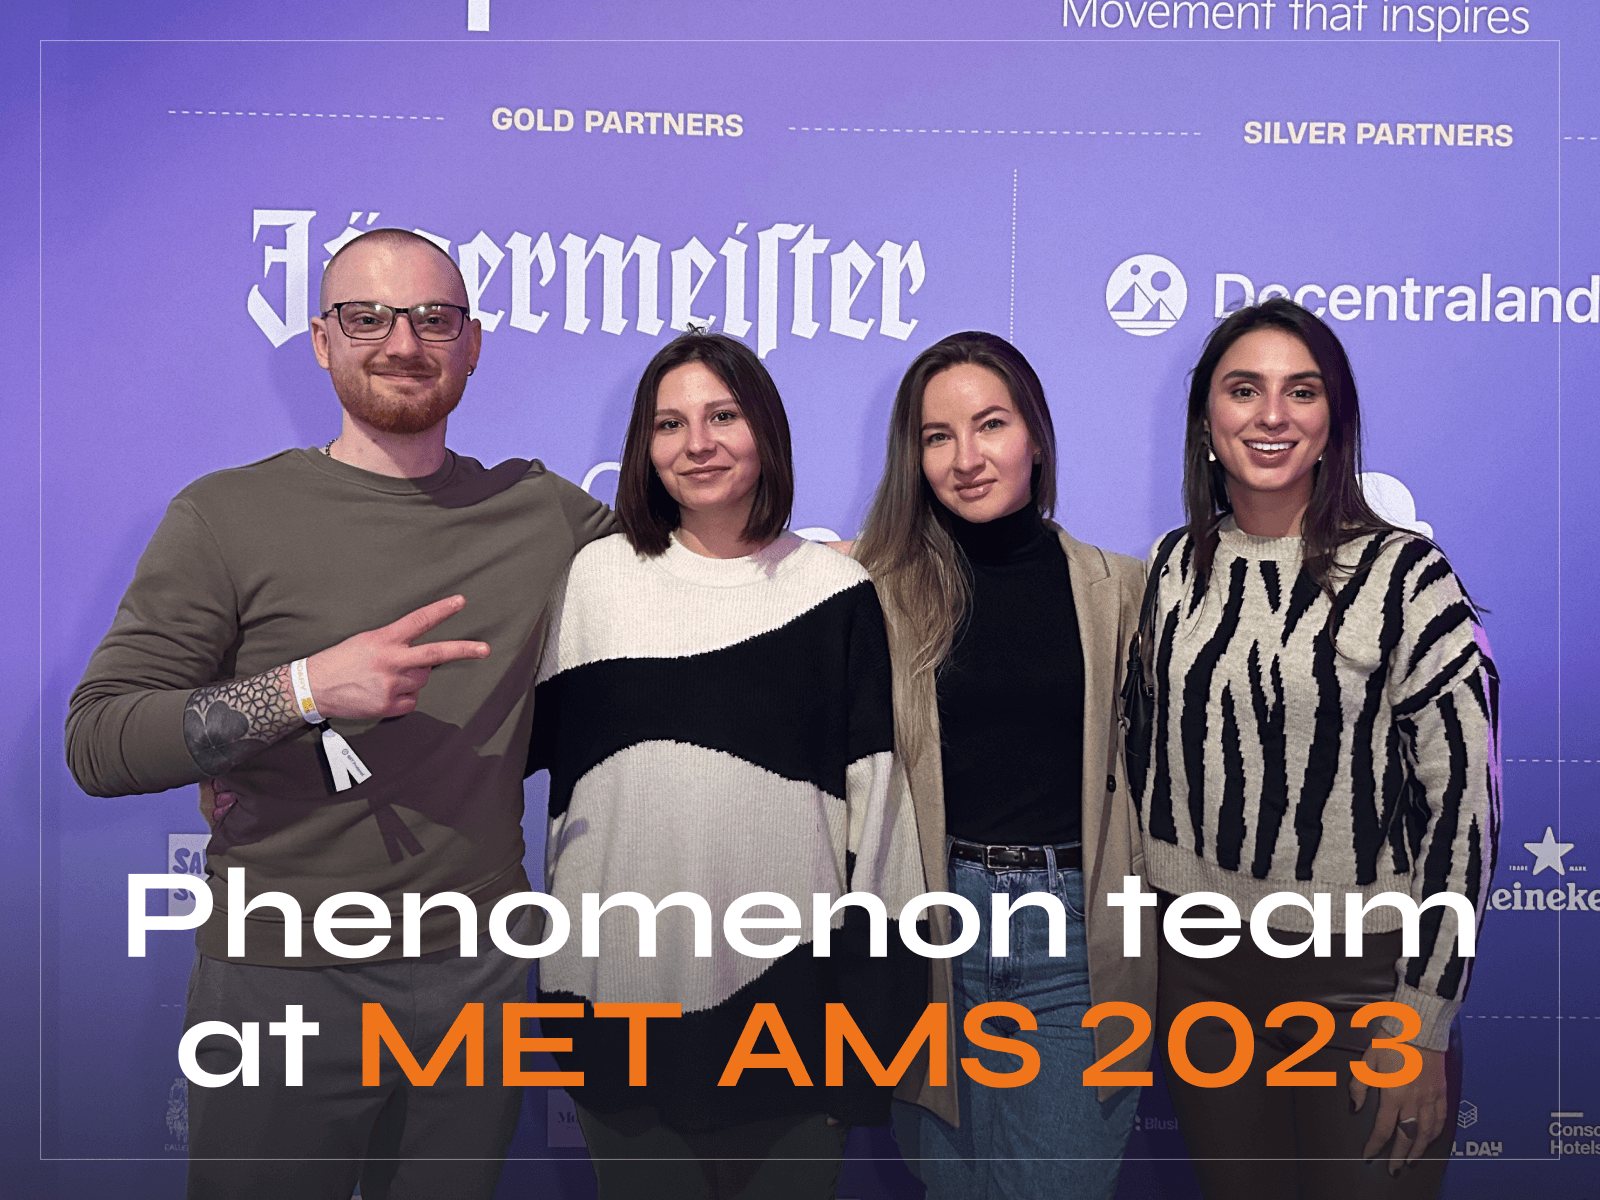 Phenomenon team at MET AMS 2023 - Photo 0